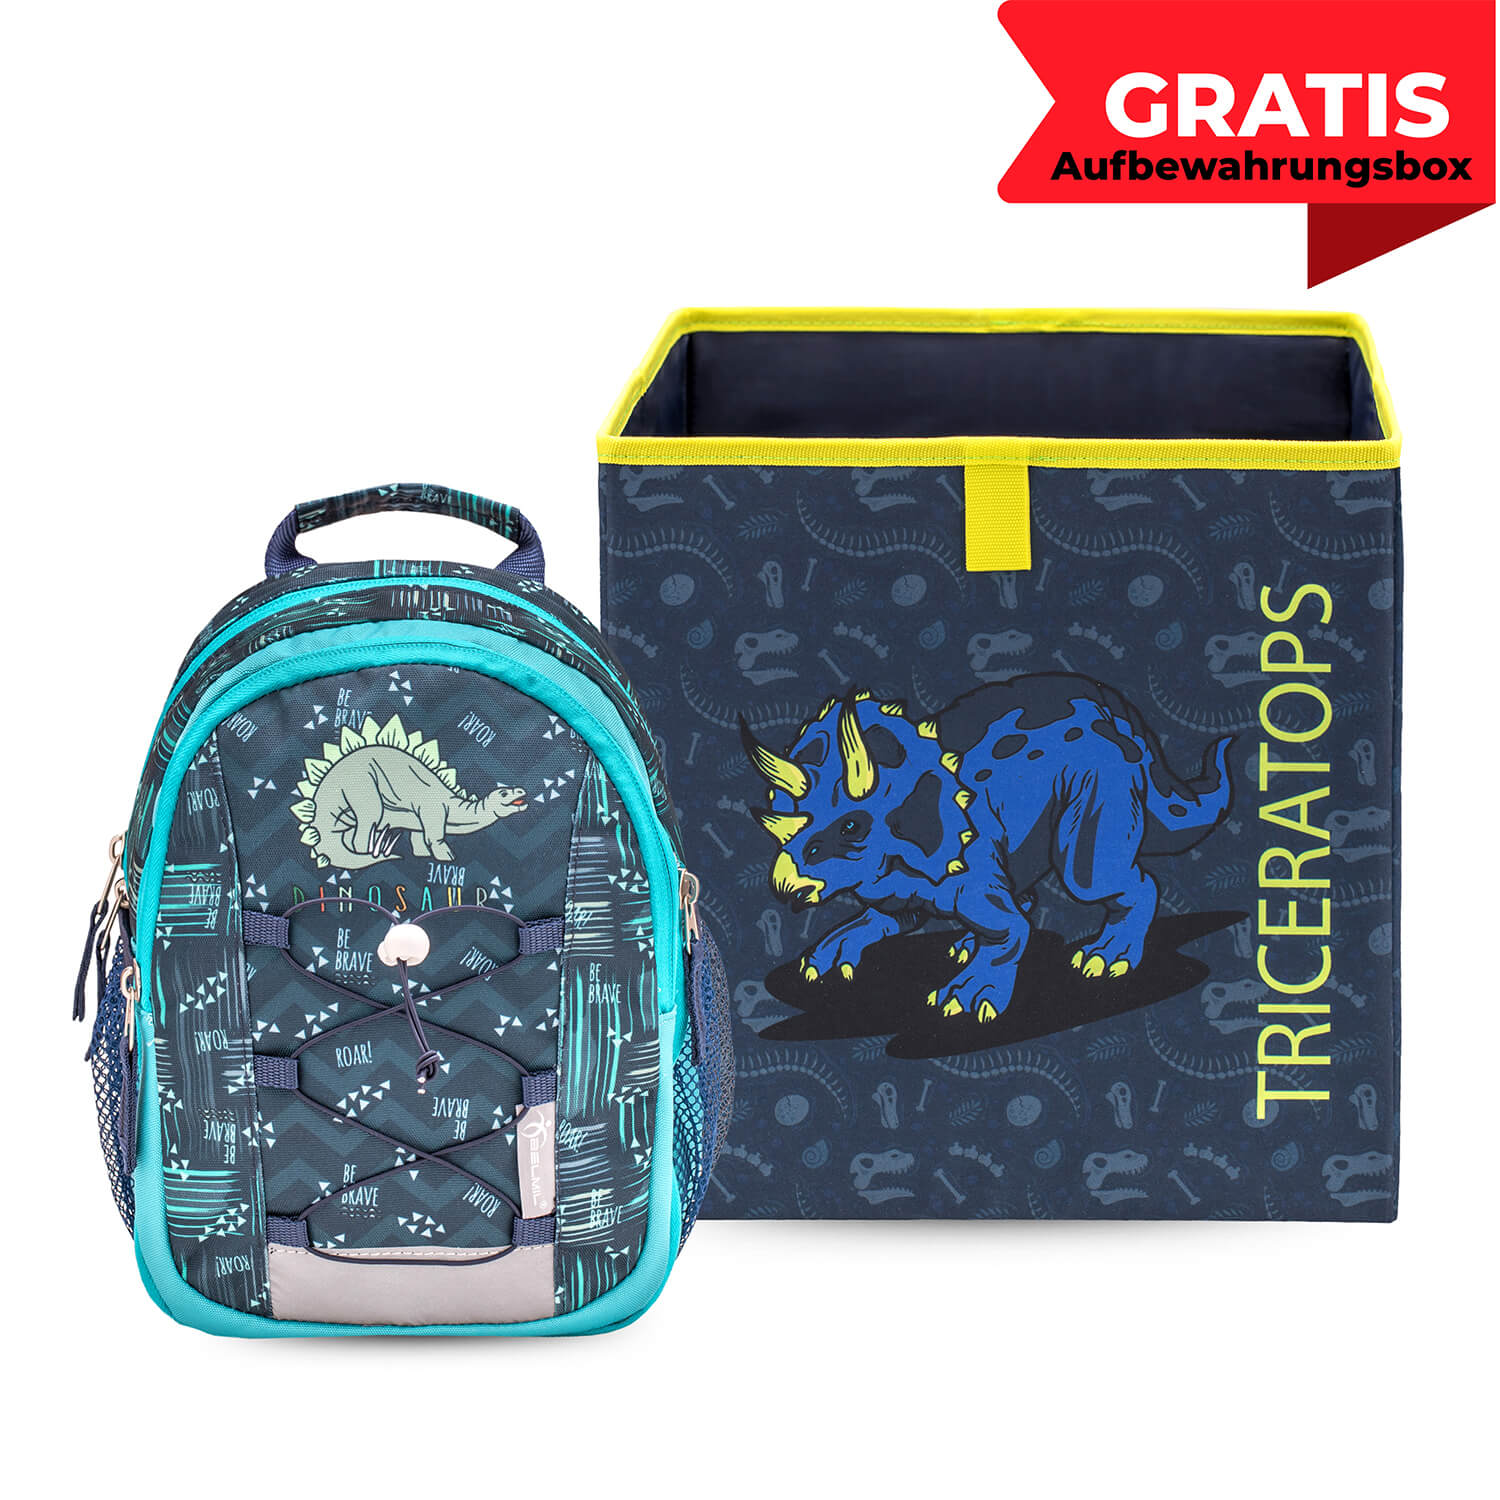 Mini Kiddy Little Stegosaurus Kindergarten Bag mit GRATIS Storage box